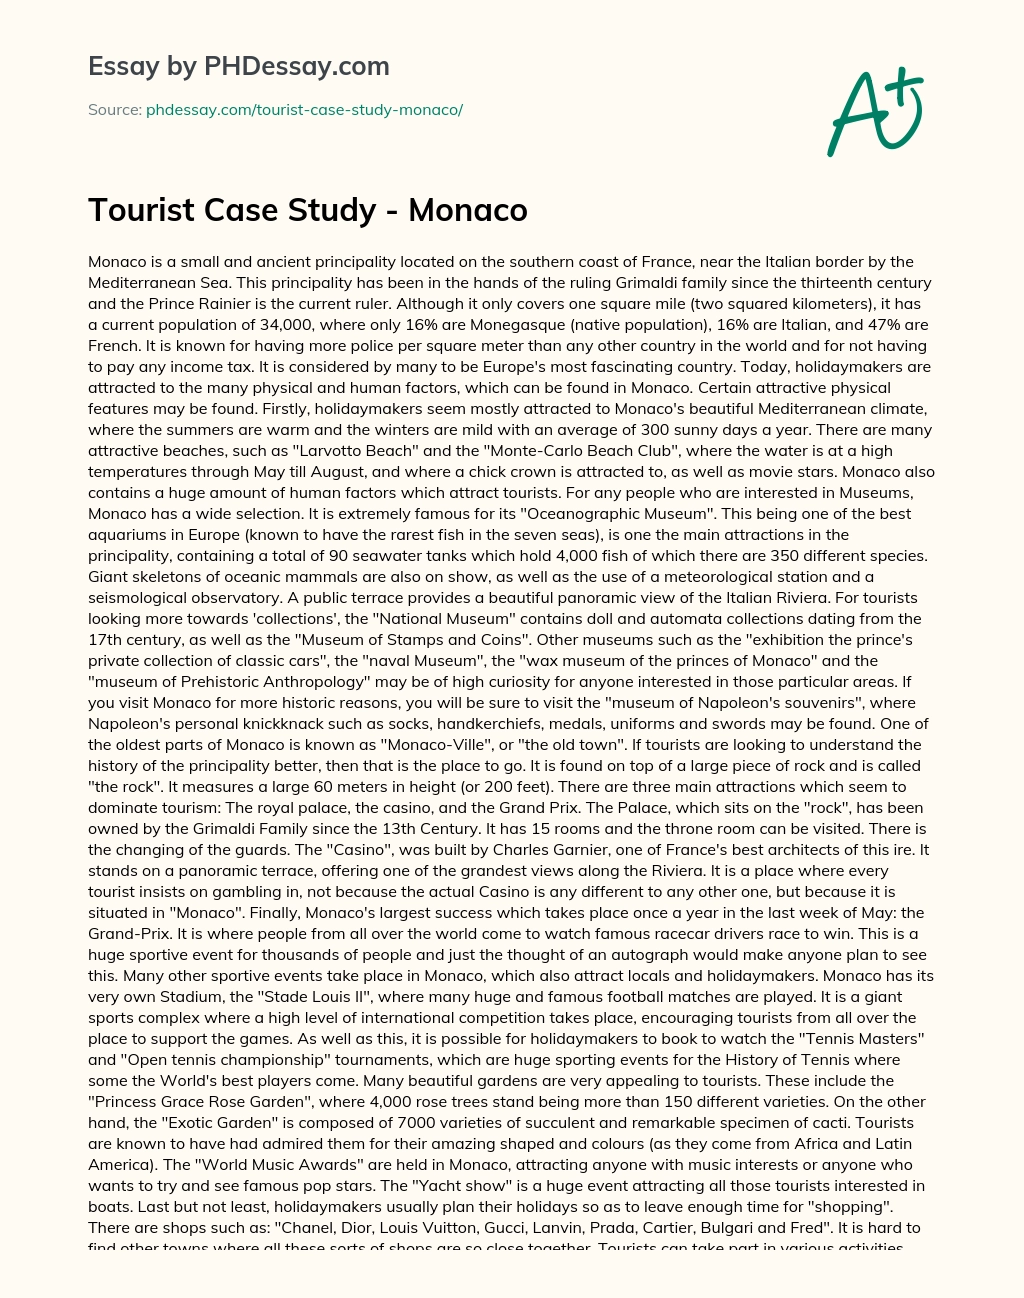 Tourist Case Study – Monaco essay